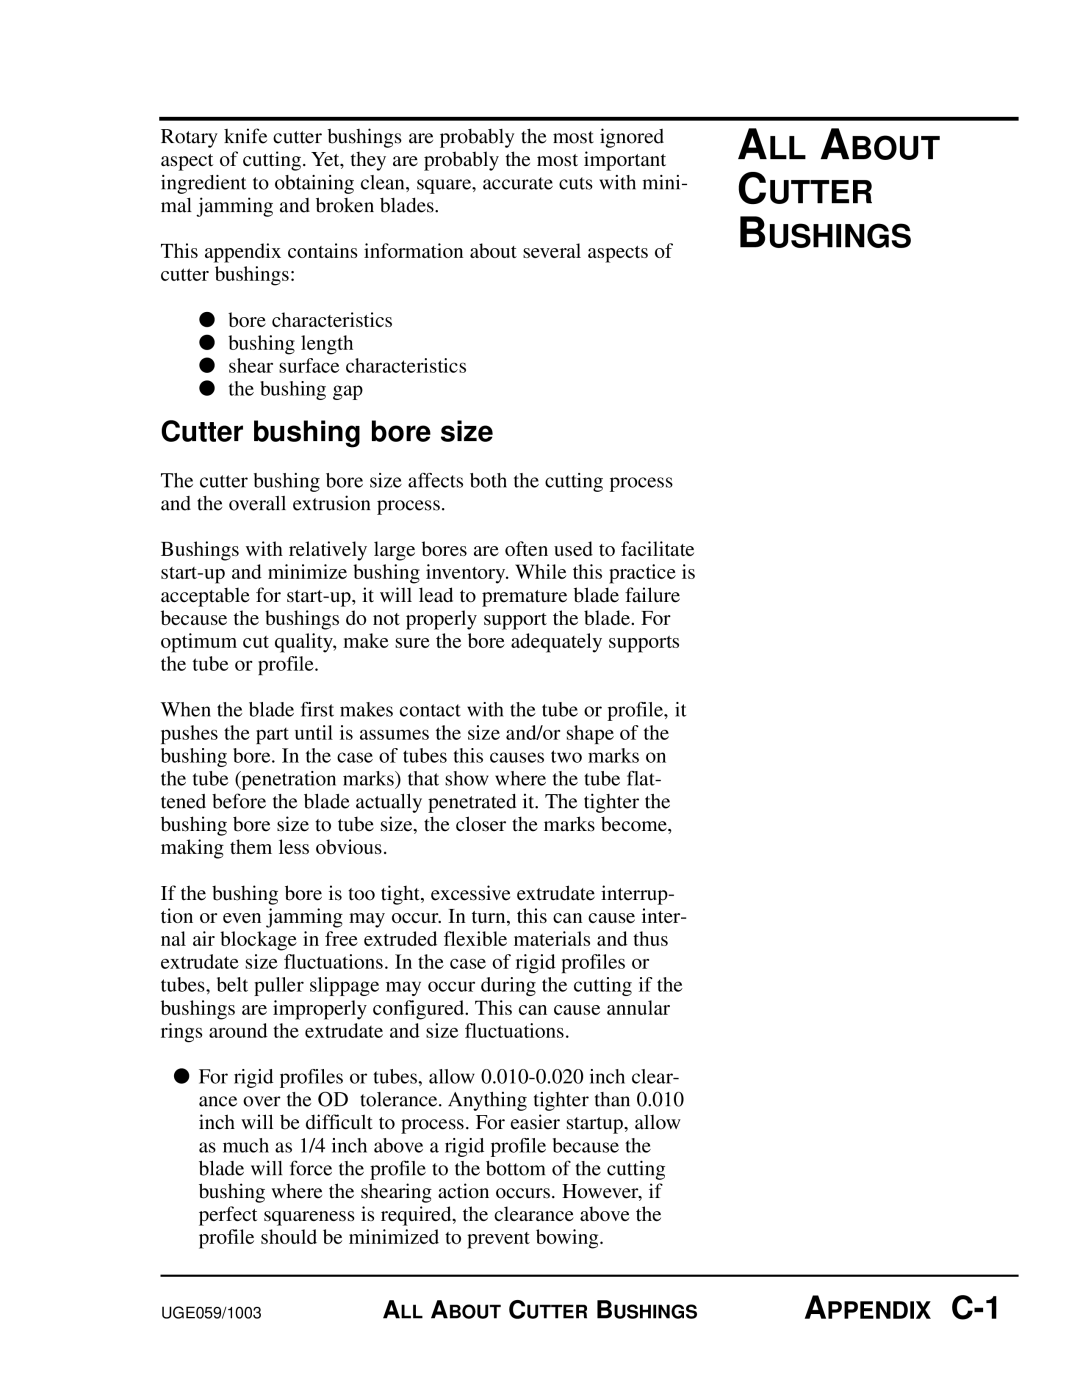 Conair SC-5 manual All About Cutter Bushings, Cutter bushing bore size, APPENDIX C-1 